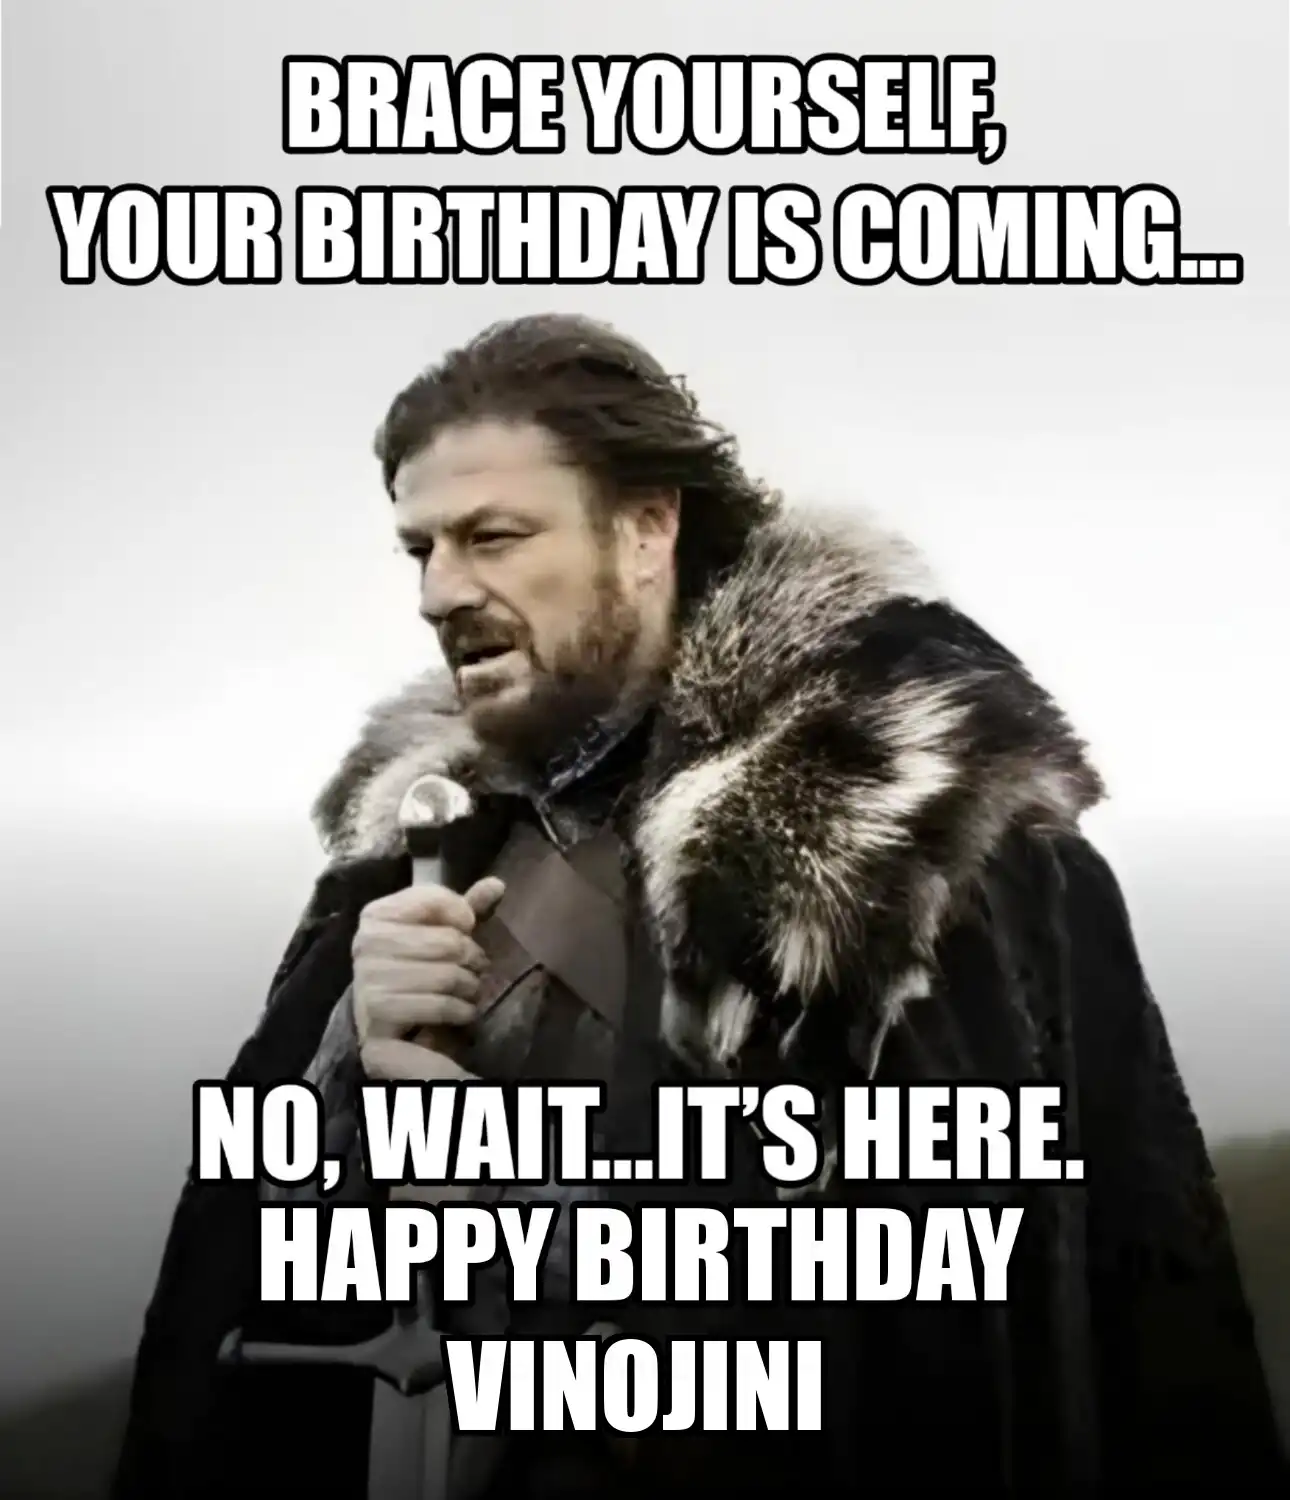 Happy Birthday Vinojini Brace Yourself Your Birthday Is Coming Meme